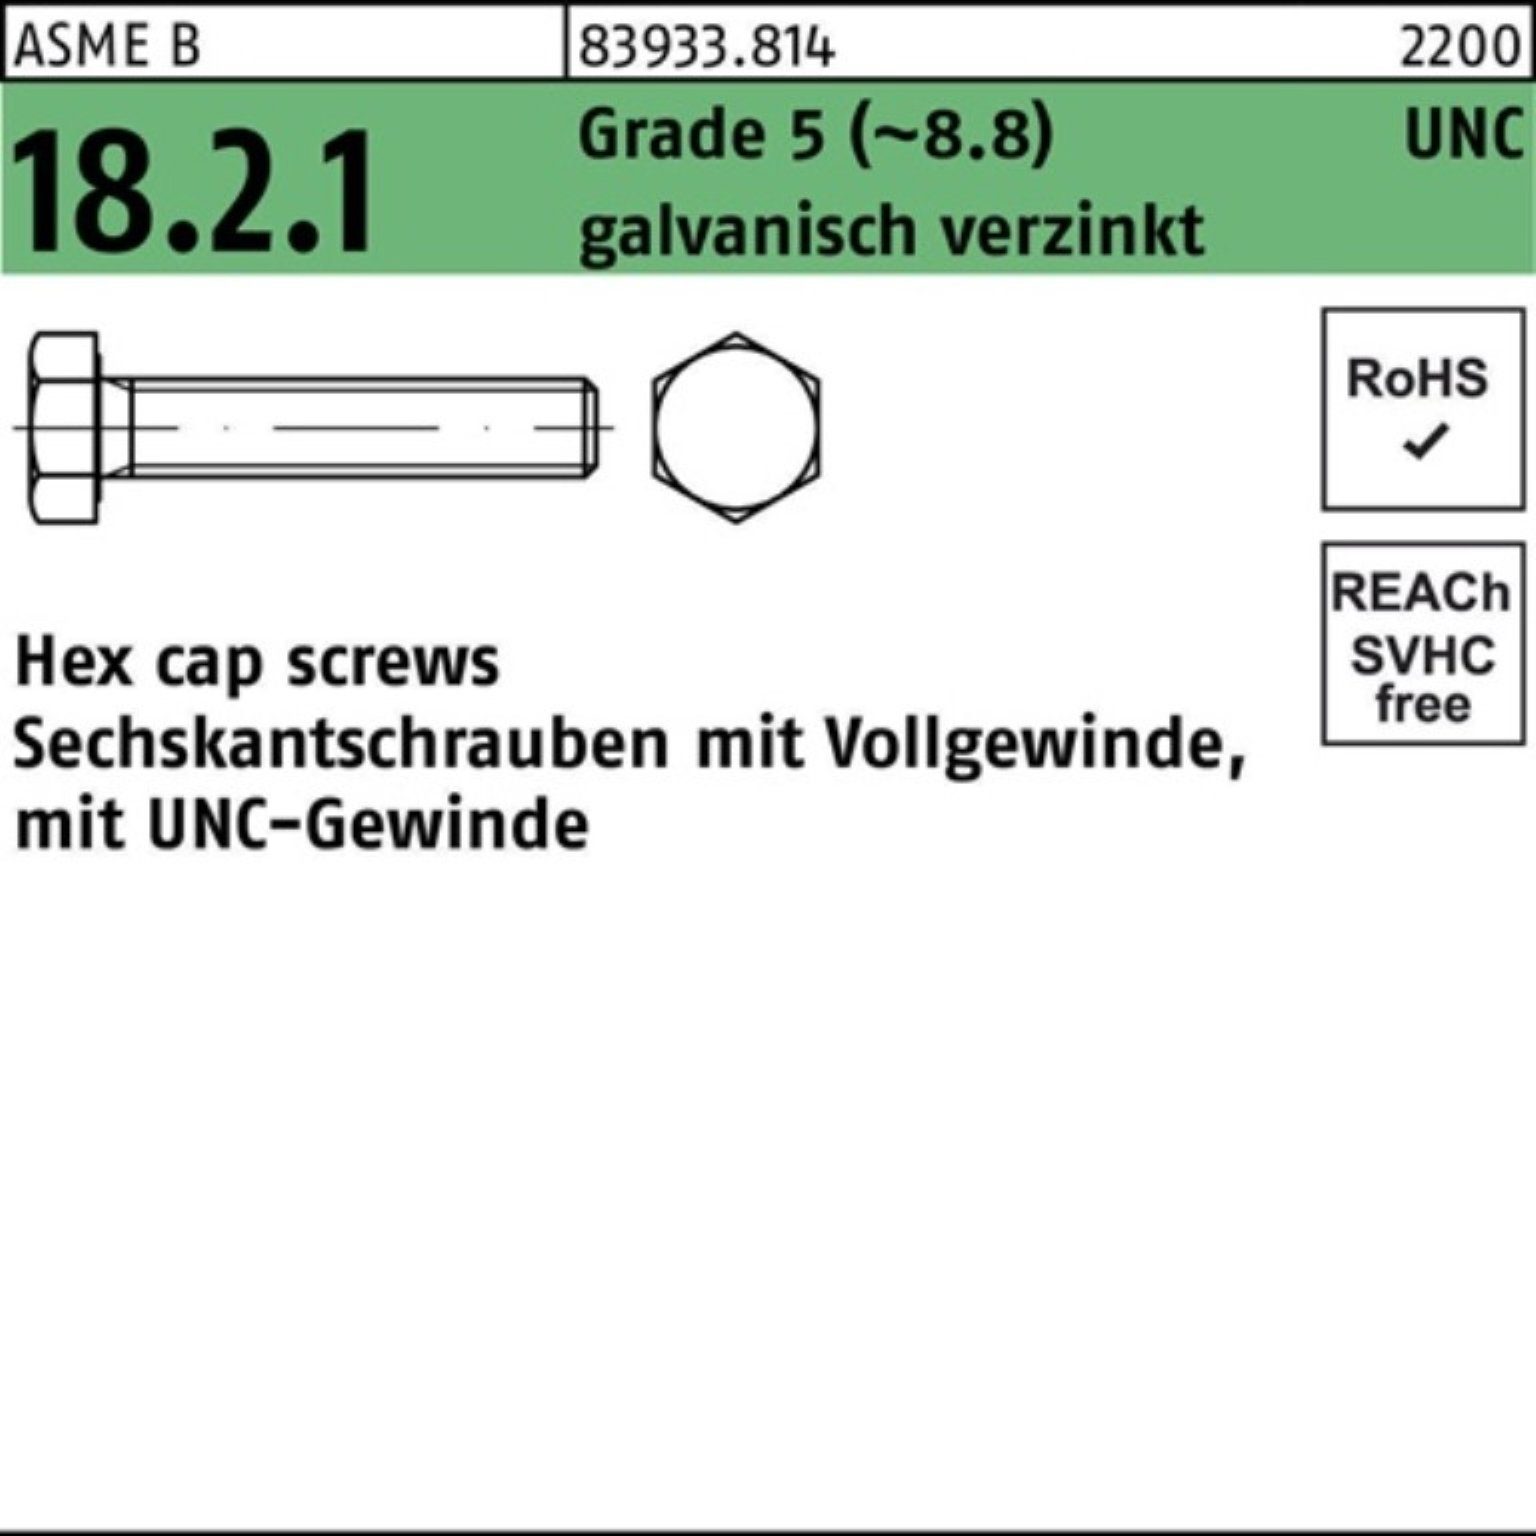 Reyher Sechskantschraube 100er Pack Sechskantschraube R 83933 UNC VG 5/8x1 Grade 5 (8.8) galv.